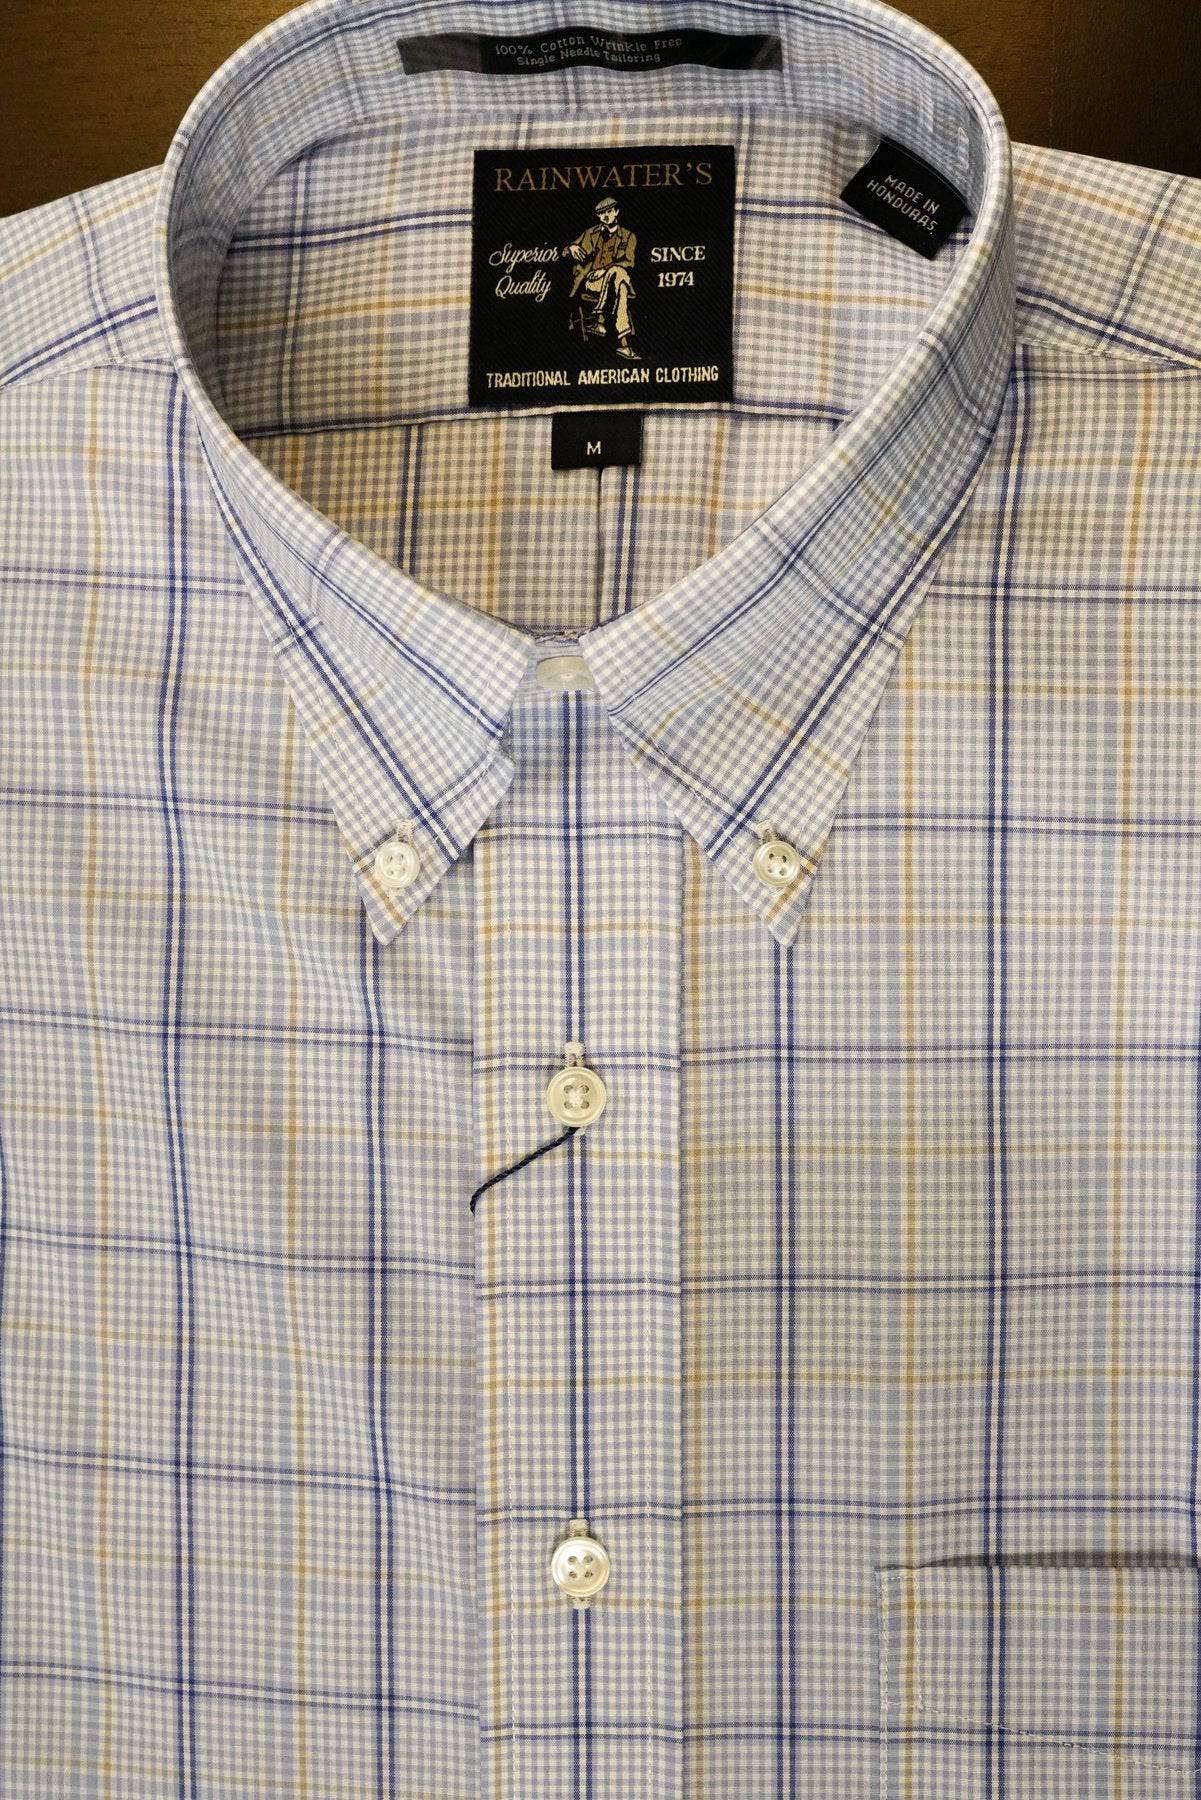 Wrinkle Free Light Blue & Khaki Plaid Button Down Sport Shirt by Rainwater's - Rainwater's Men's Clothing and Tuxedo Rental